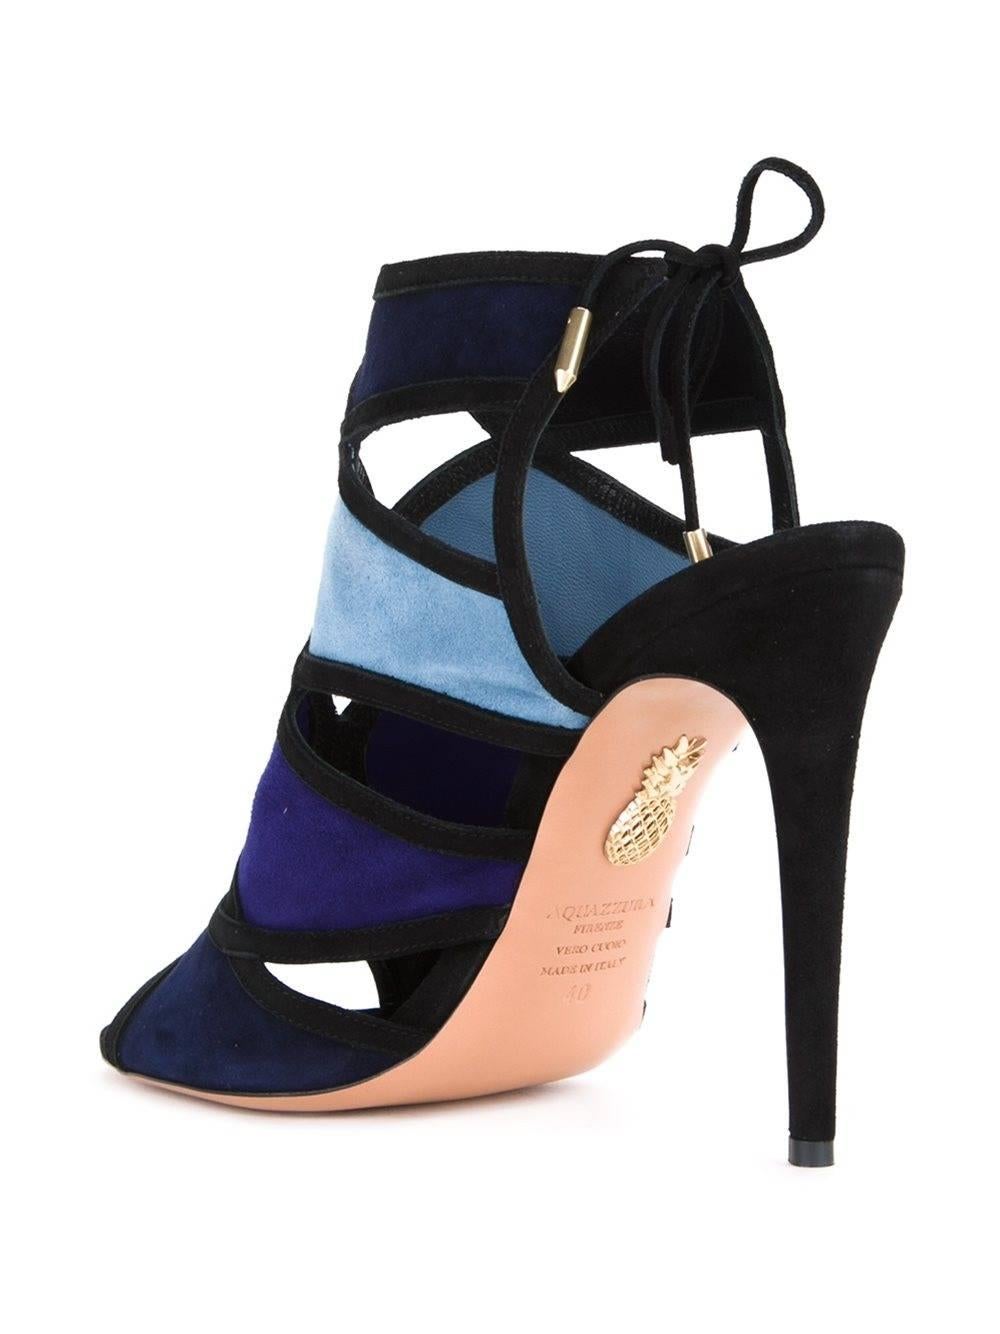 Black Aquazzura NEW & SOLD OUT Blue Suede Colorblock Evening Heels Sandals in Box